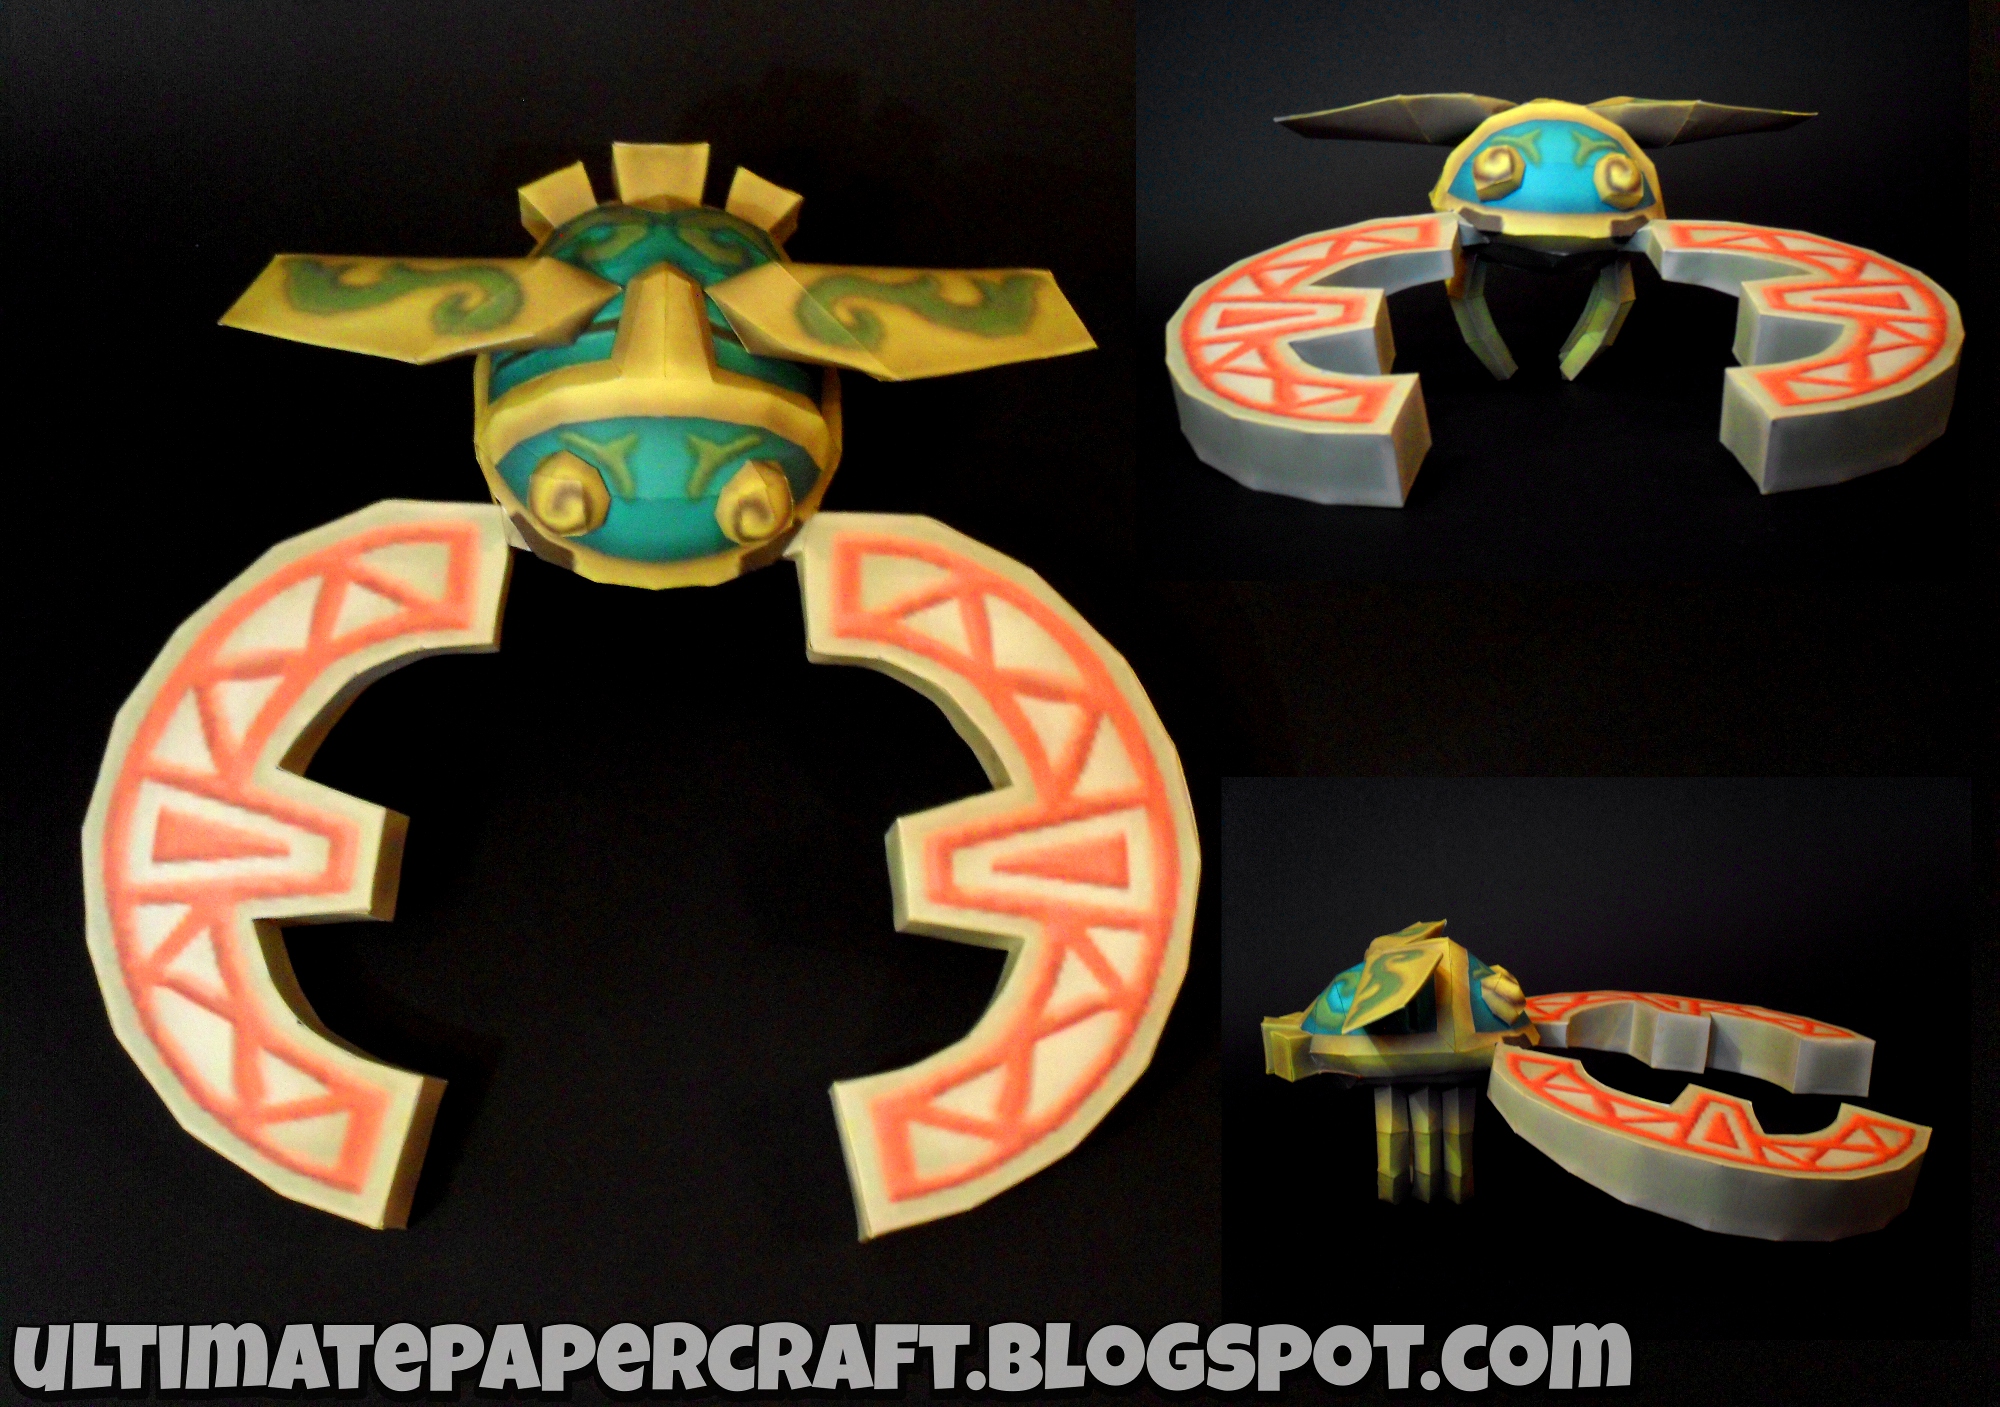 PAPERMAU: The Legend of Zelda: Spirit Tracks - Engineer Link Paper Modelby  Paper Zelda